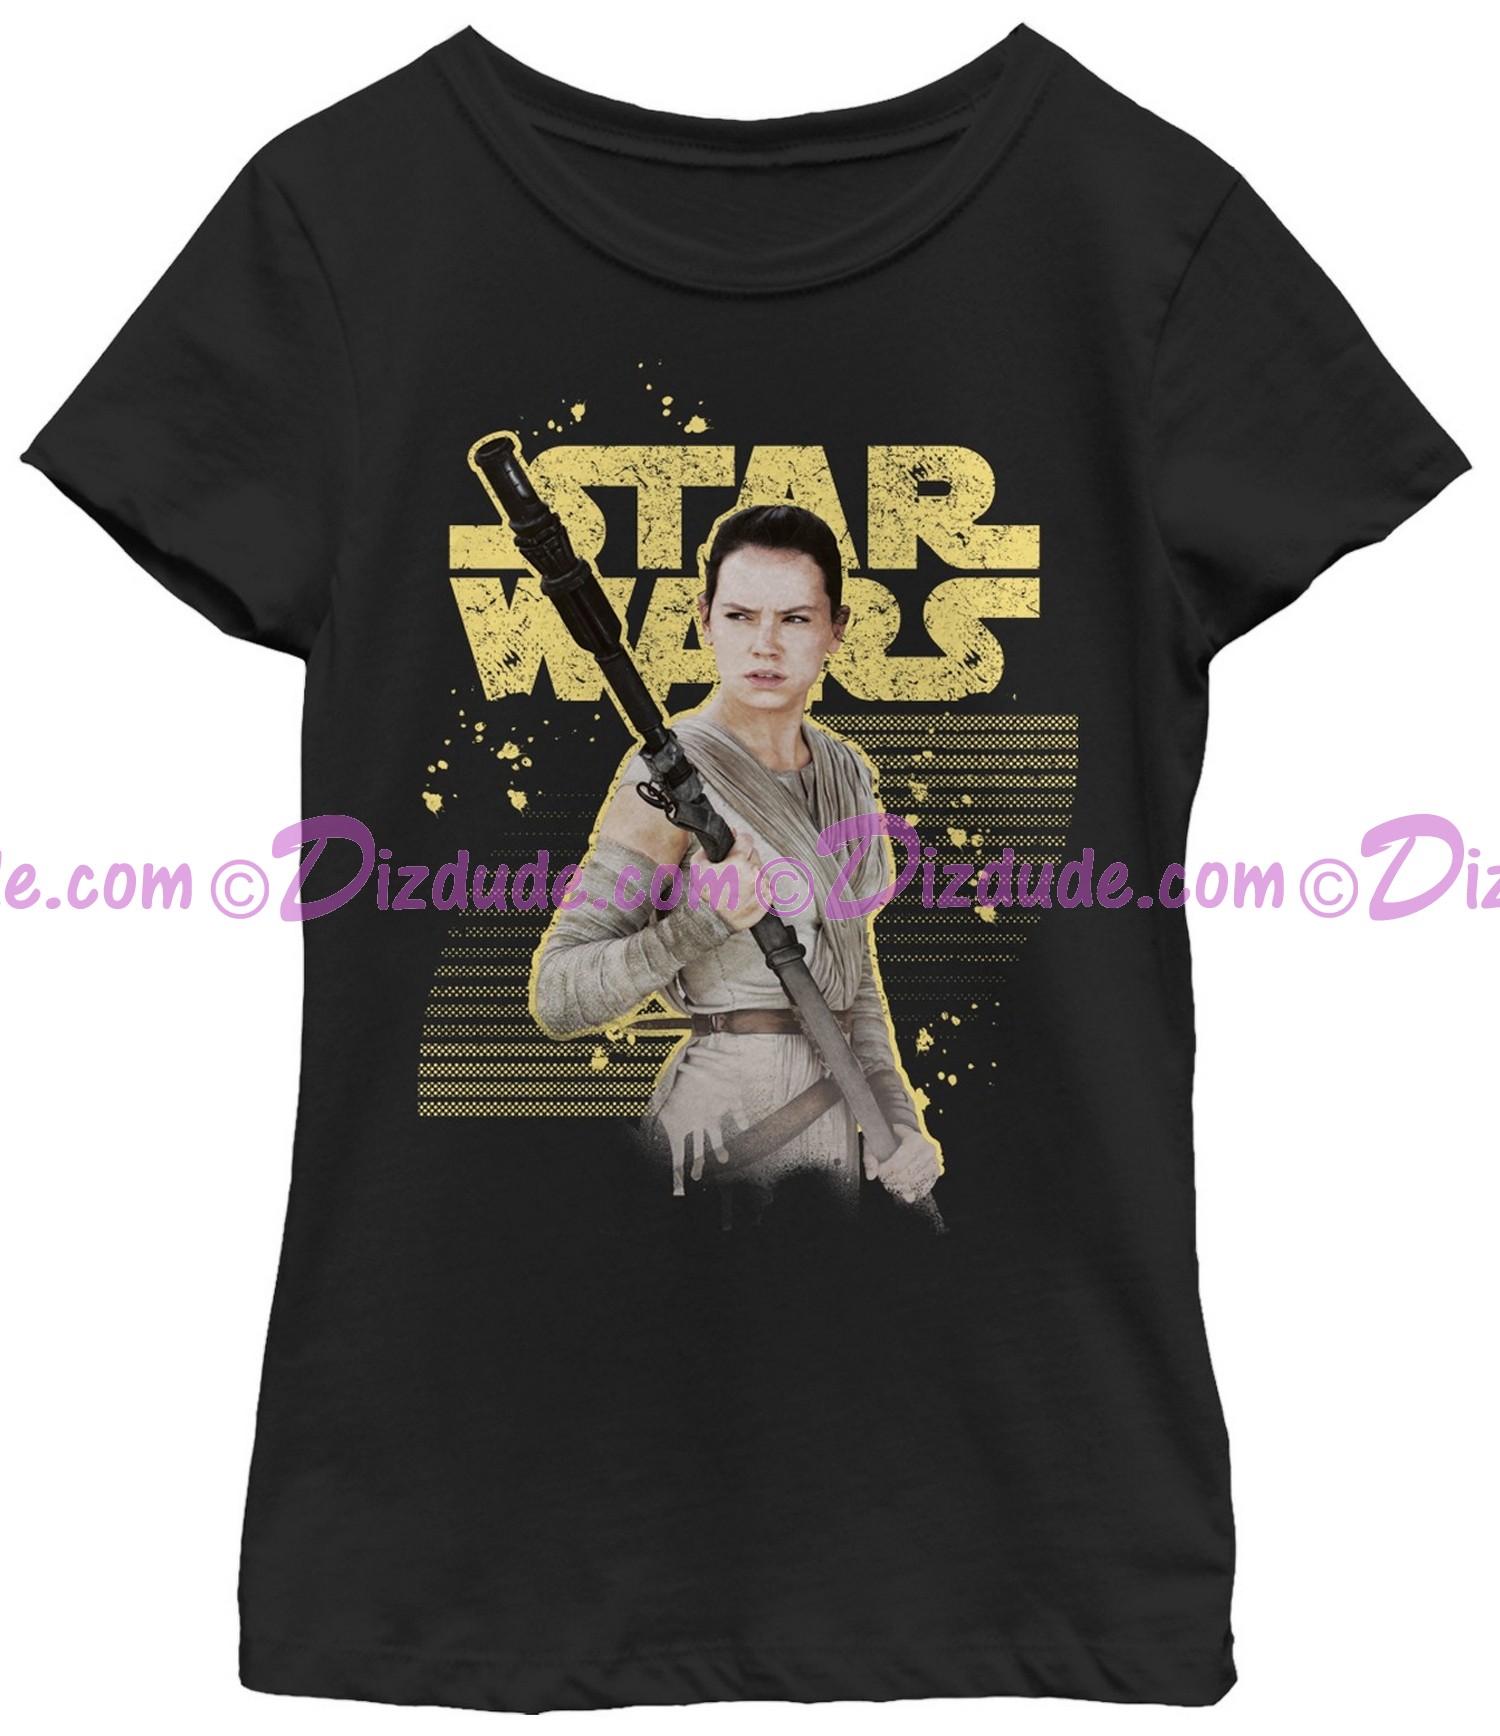 Star Wars The Force Awakens - Rey with Retro Distressed Background Junior/ Girls T-Shirt (Tshirt, T shirt or Tee) © Dizdude.com